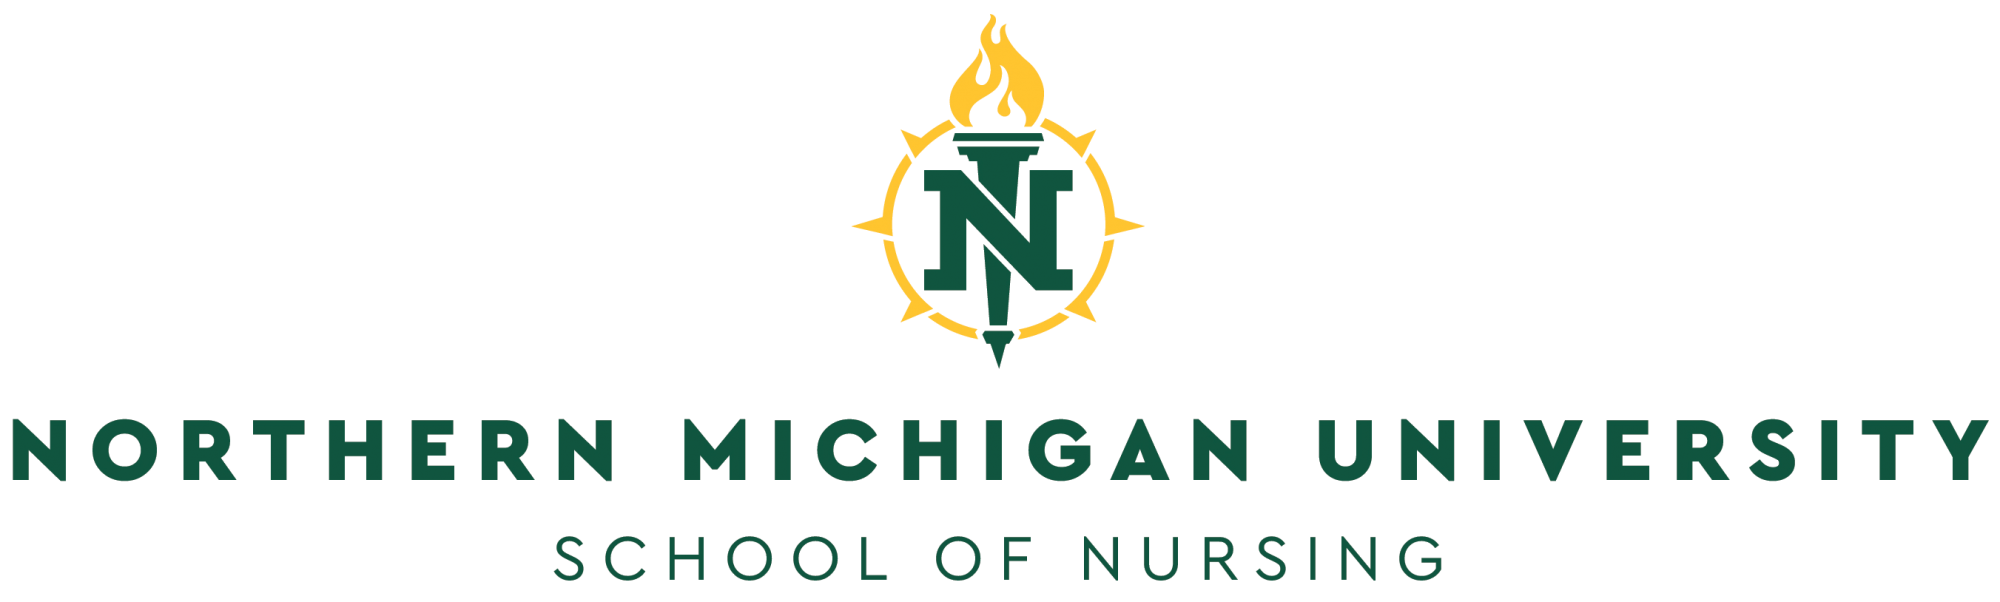 NMU School of Nursing Logo